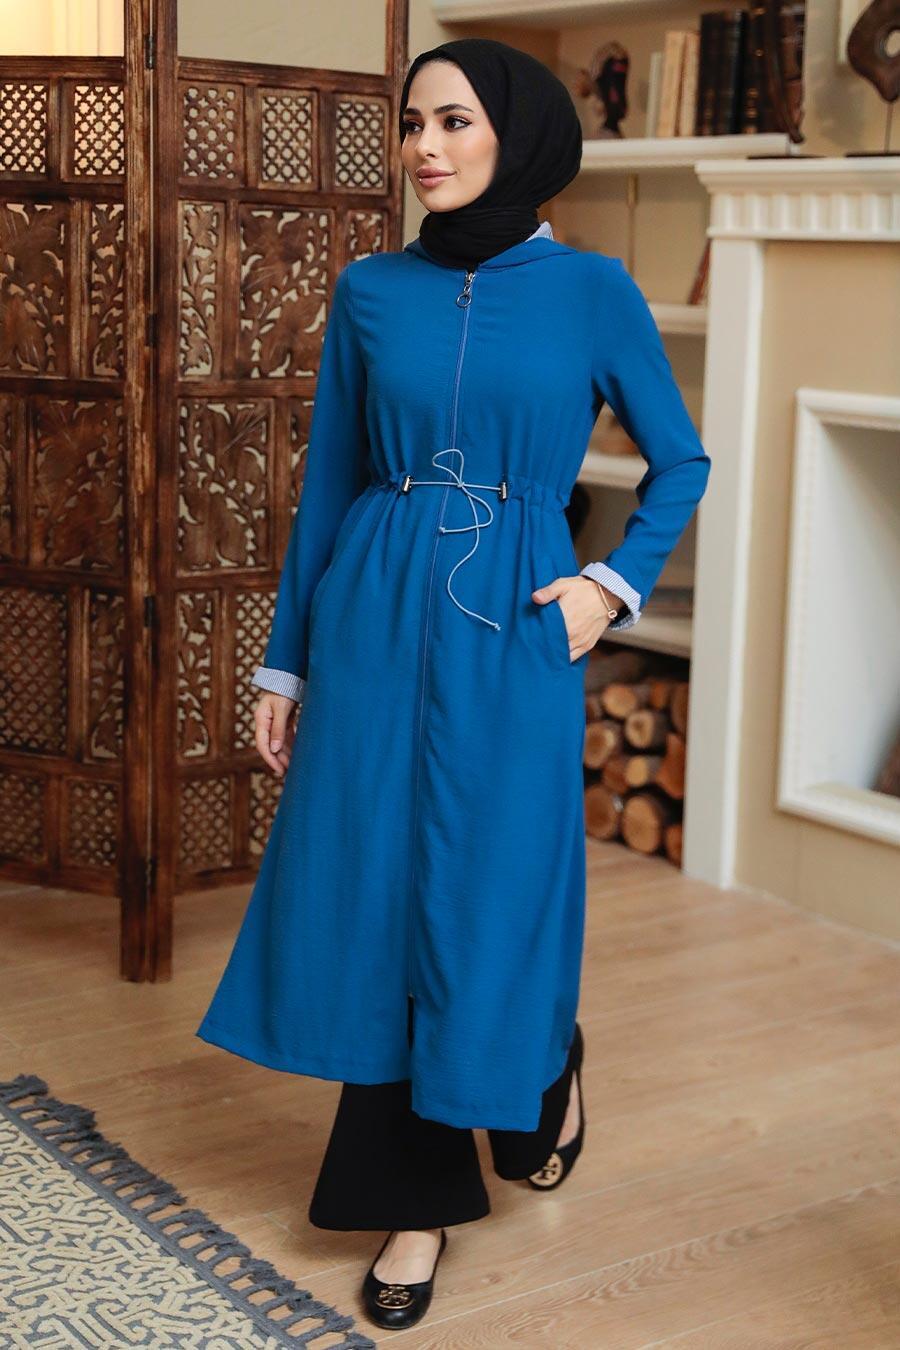 İndigo Blue Hijab Coat 5721IM